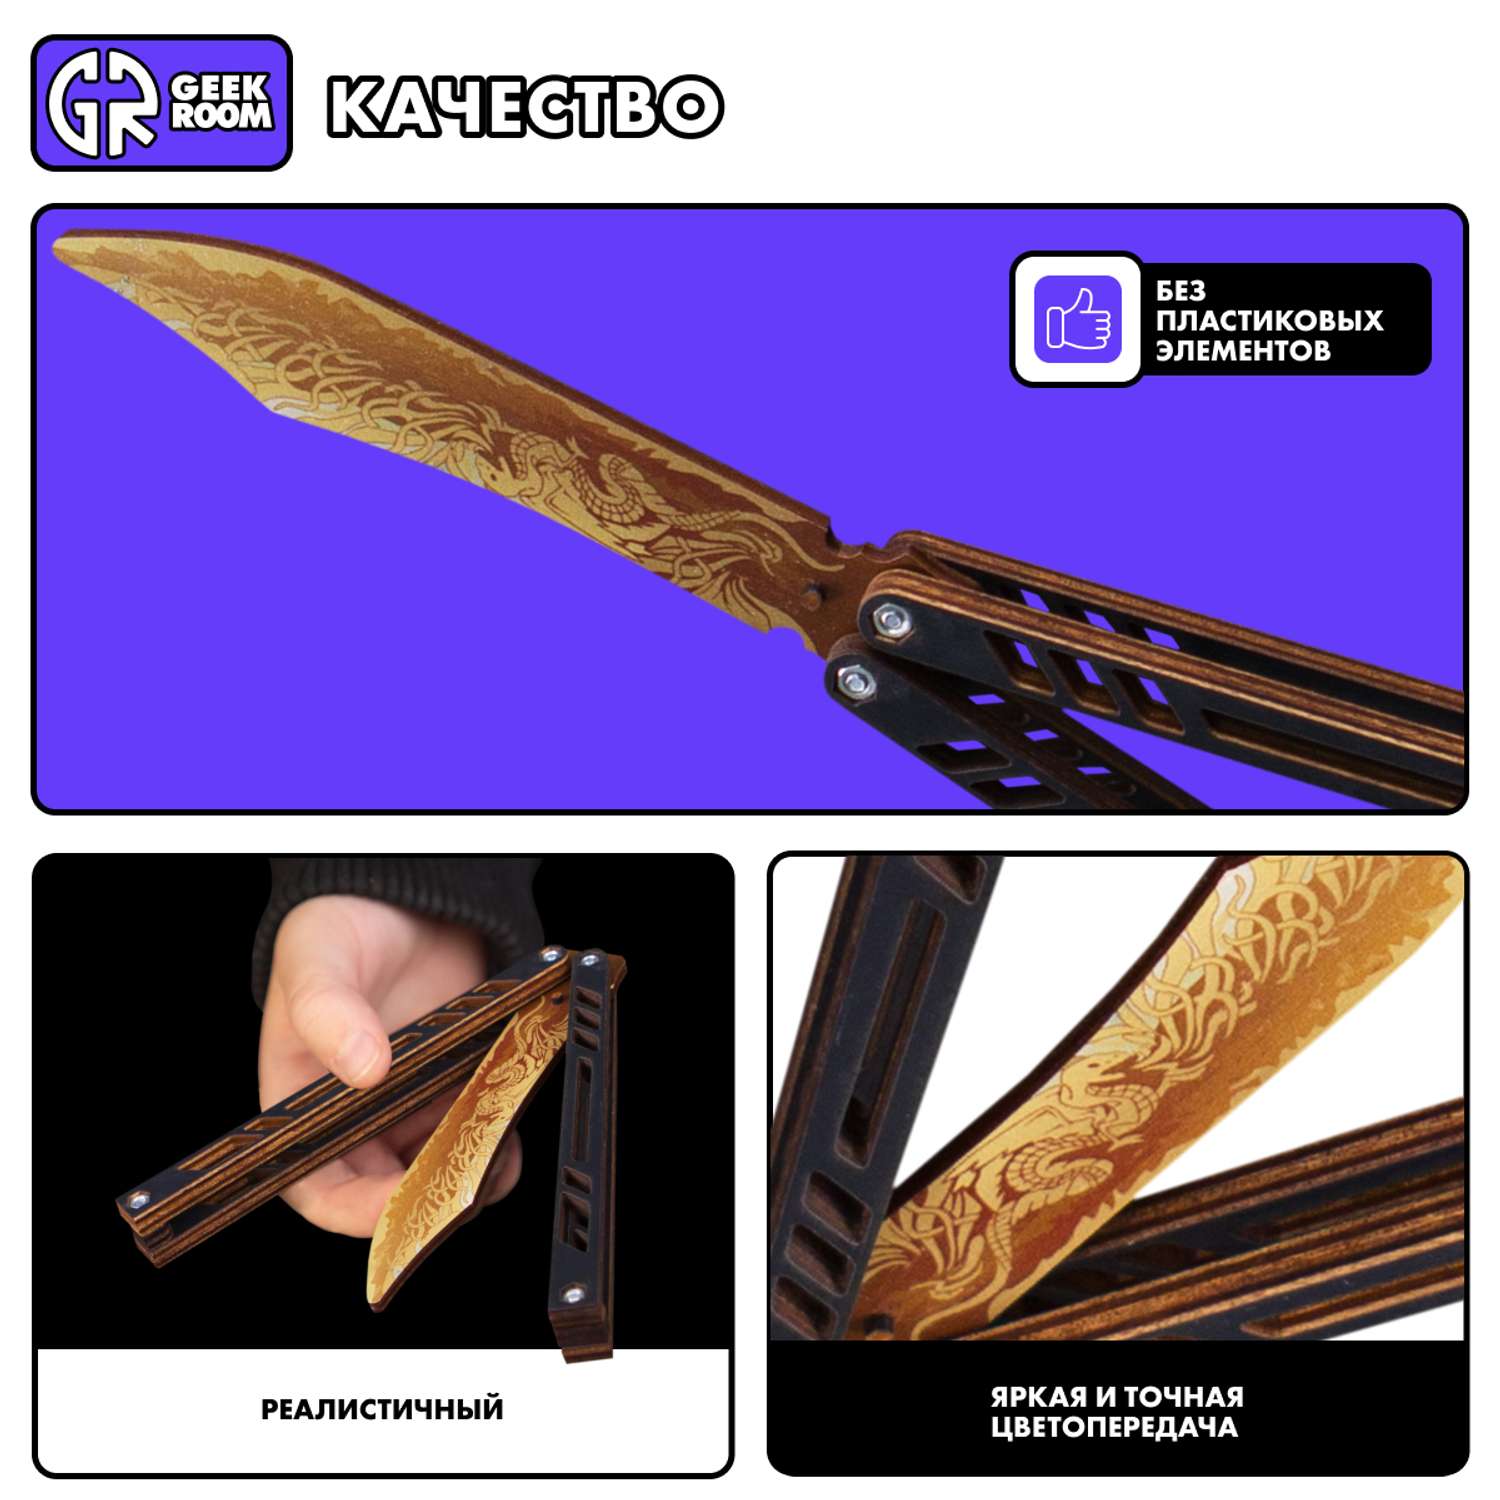 Нож бабочка GEEKROOM Legacy деревянный сувенирный - фото 3